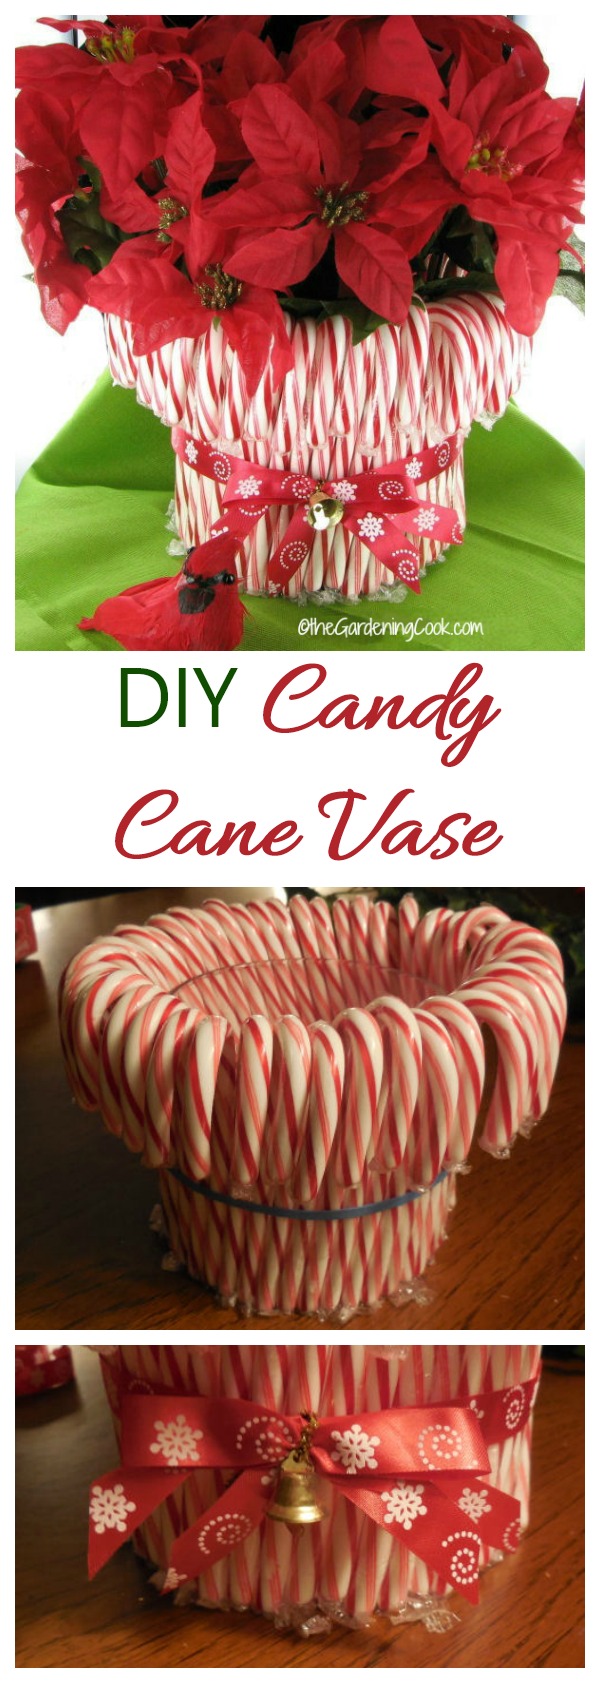 DIY Candy Cane Vas - Gampang Libur Decor Project